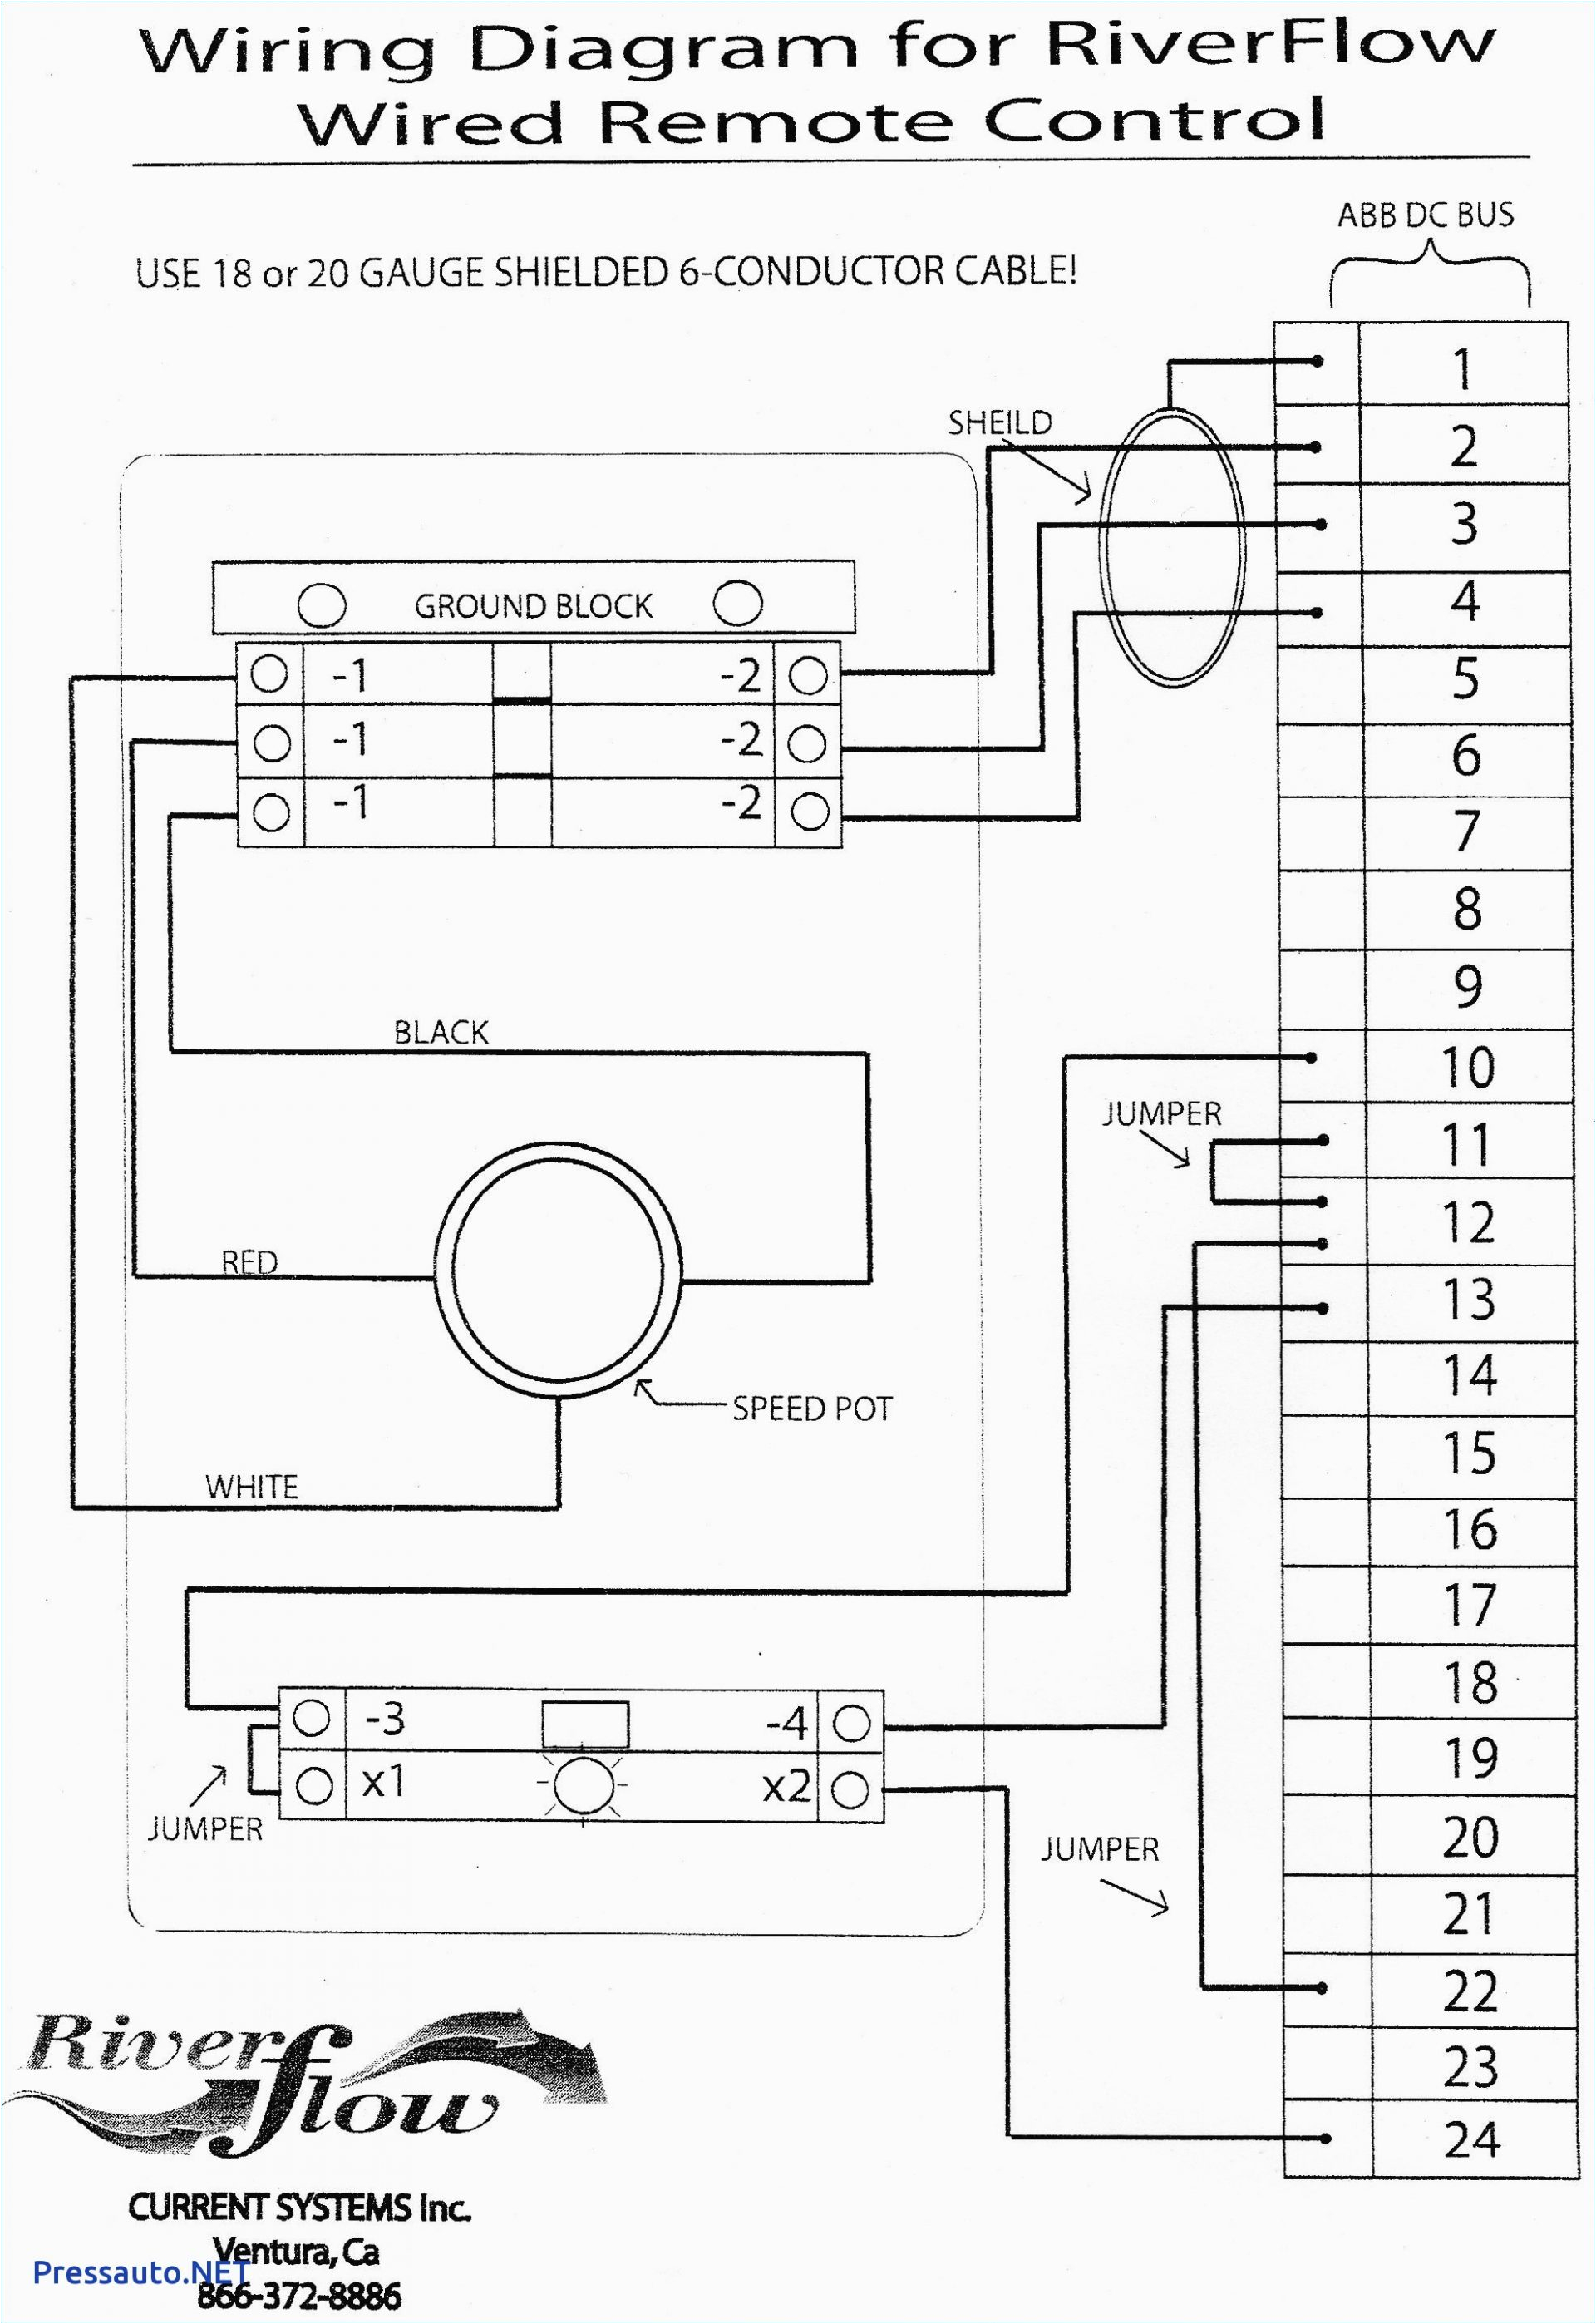 abb wiring diagrams wiring diagram operations abb ai830 wiring diagram abb wiring diagram